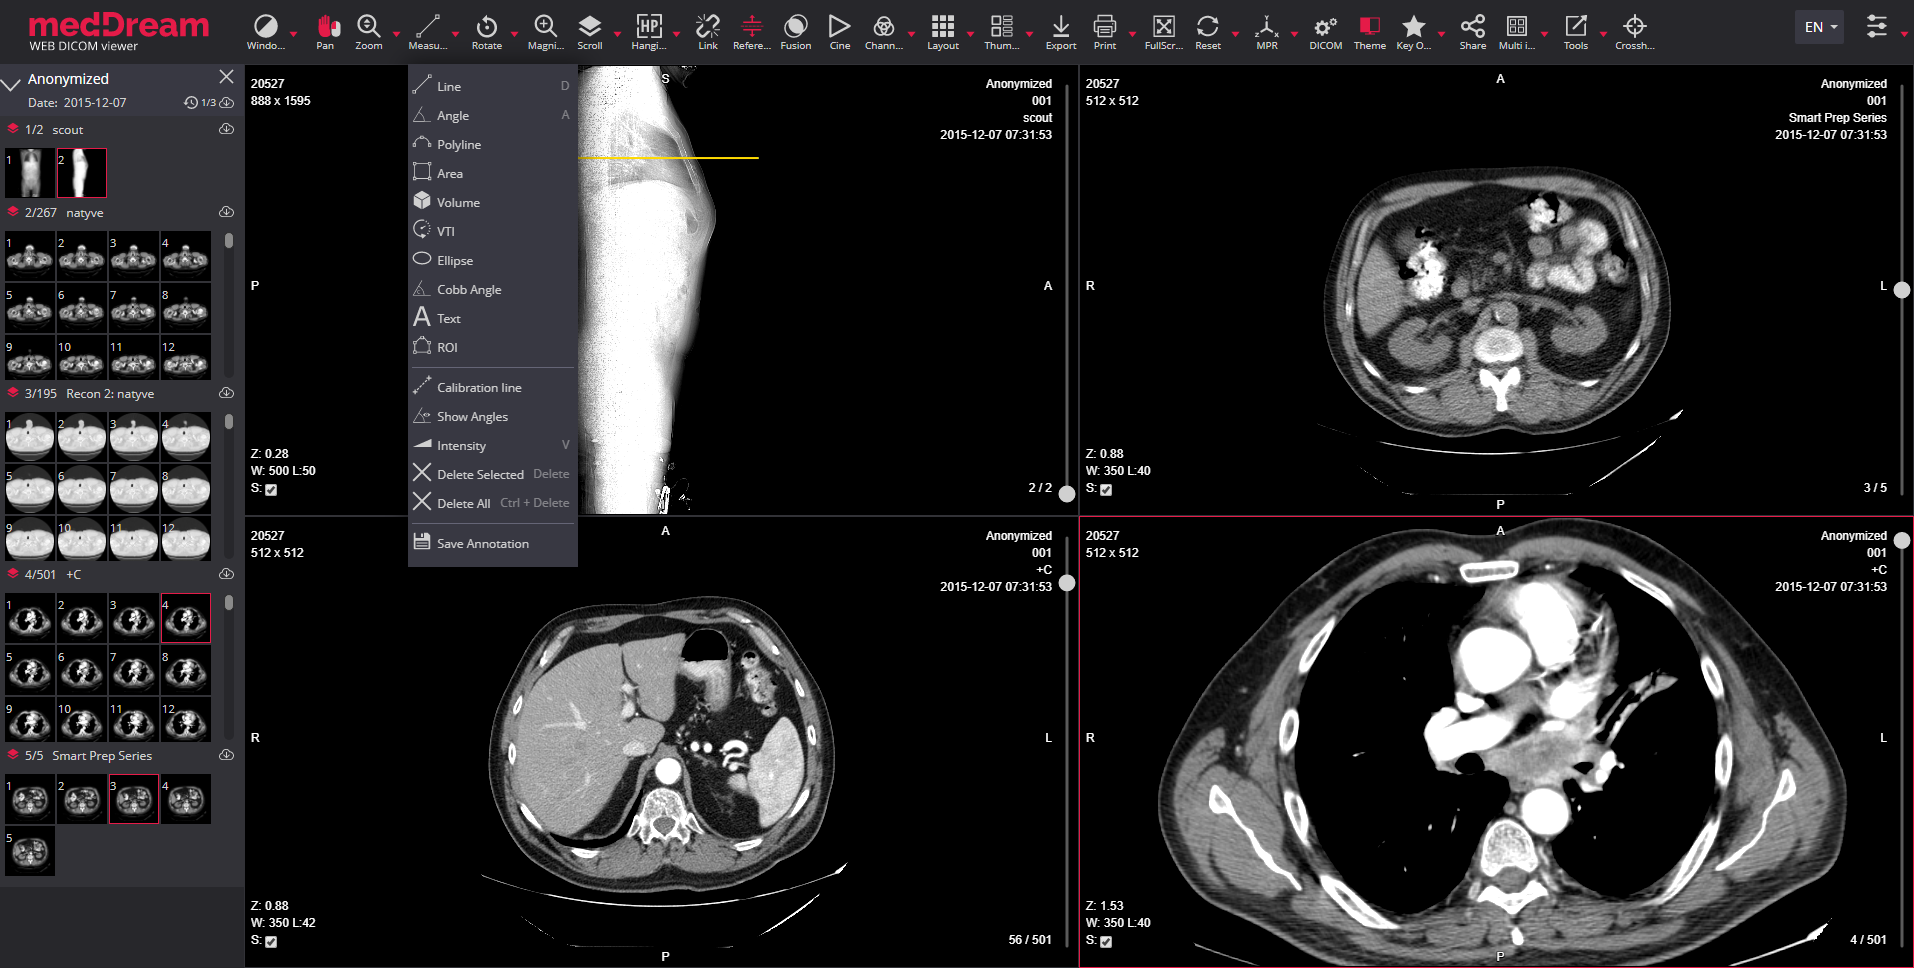 MedDream DICOM VIEWER Radiology features